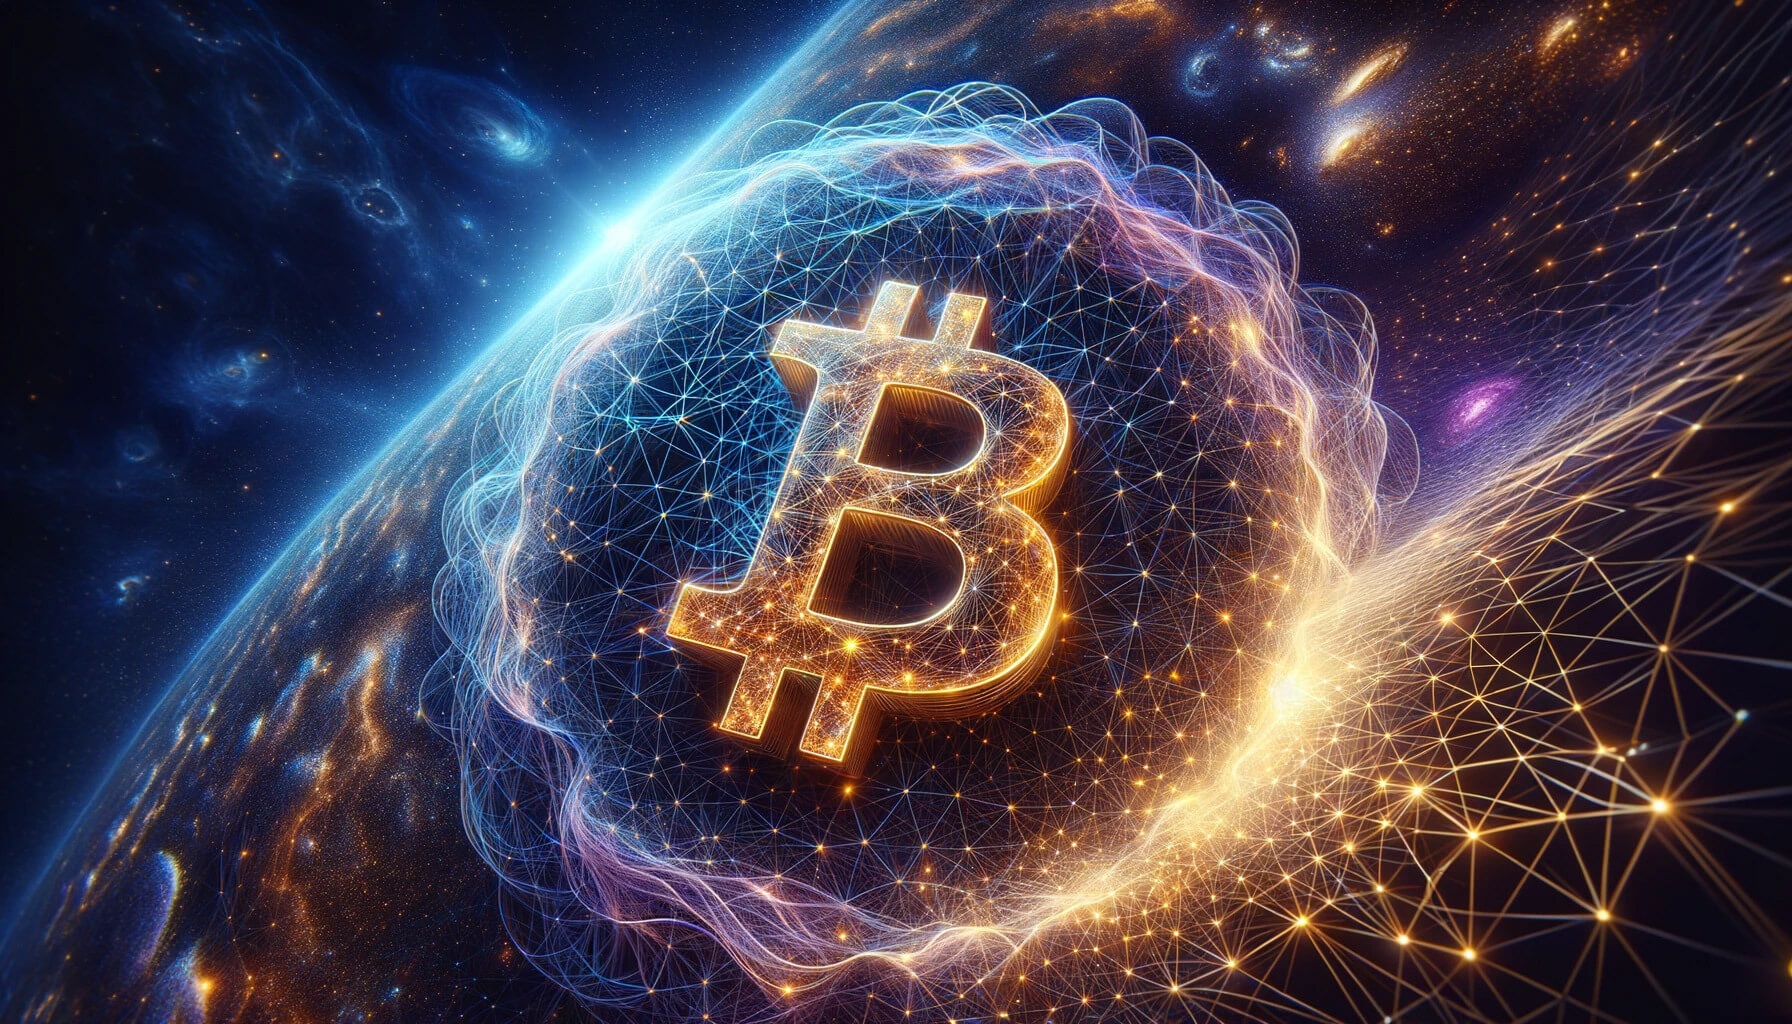  cosmos bitcoin upgrade nbtc inter-blockchain communication tweet 